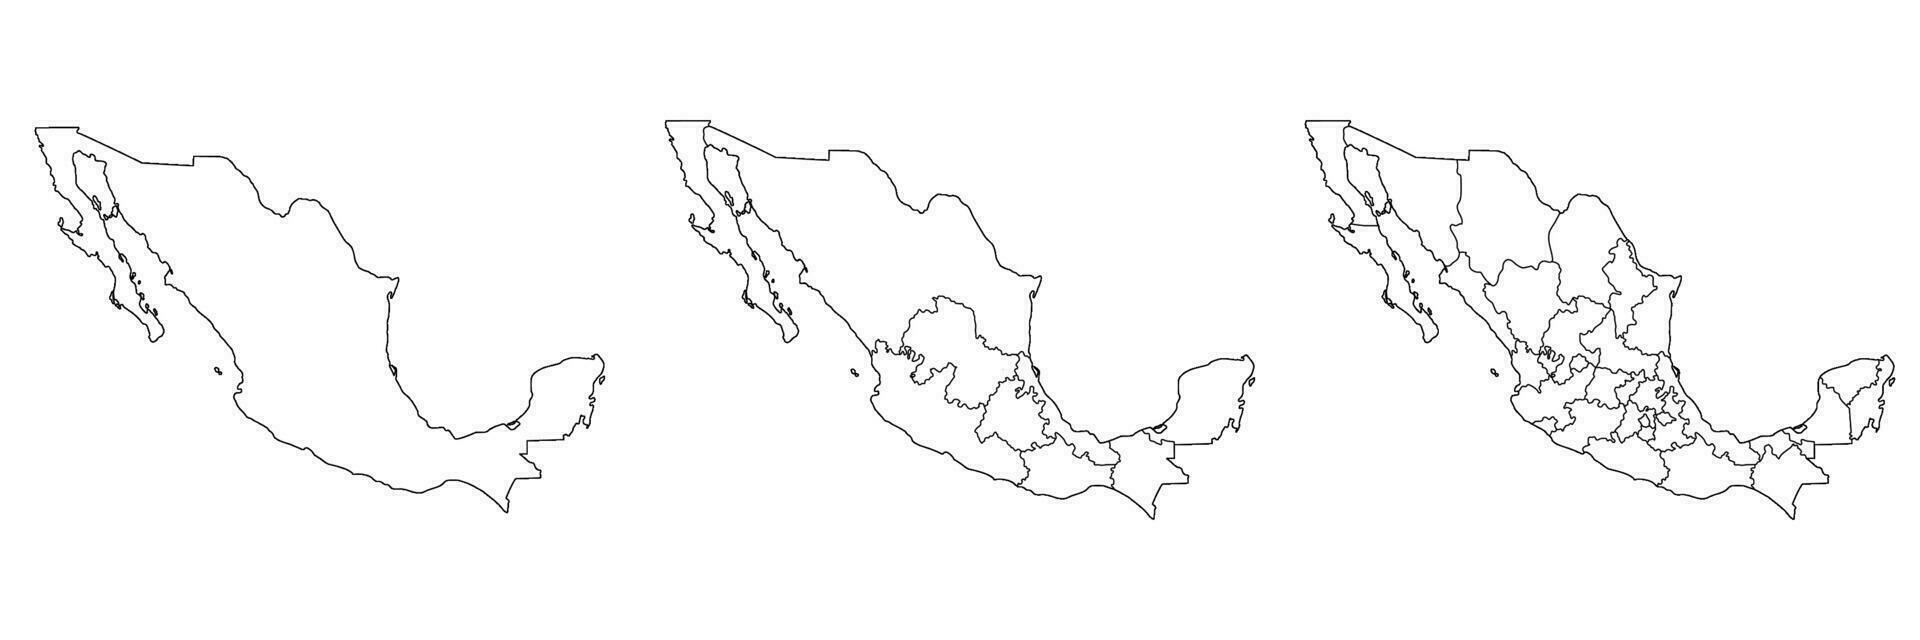 Karte von Mexiko Satz. Mexikaner Karte Satz. vektor